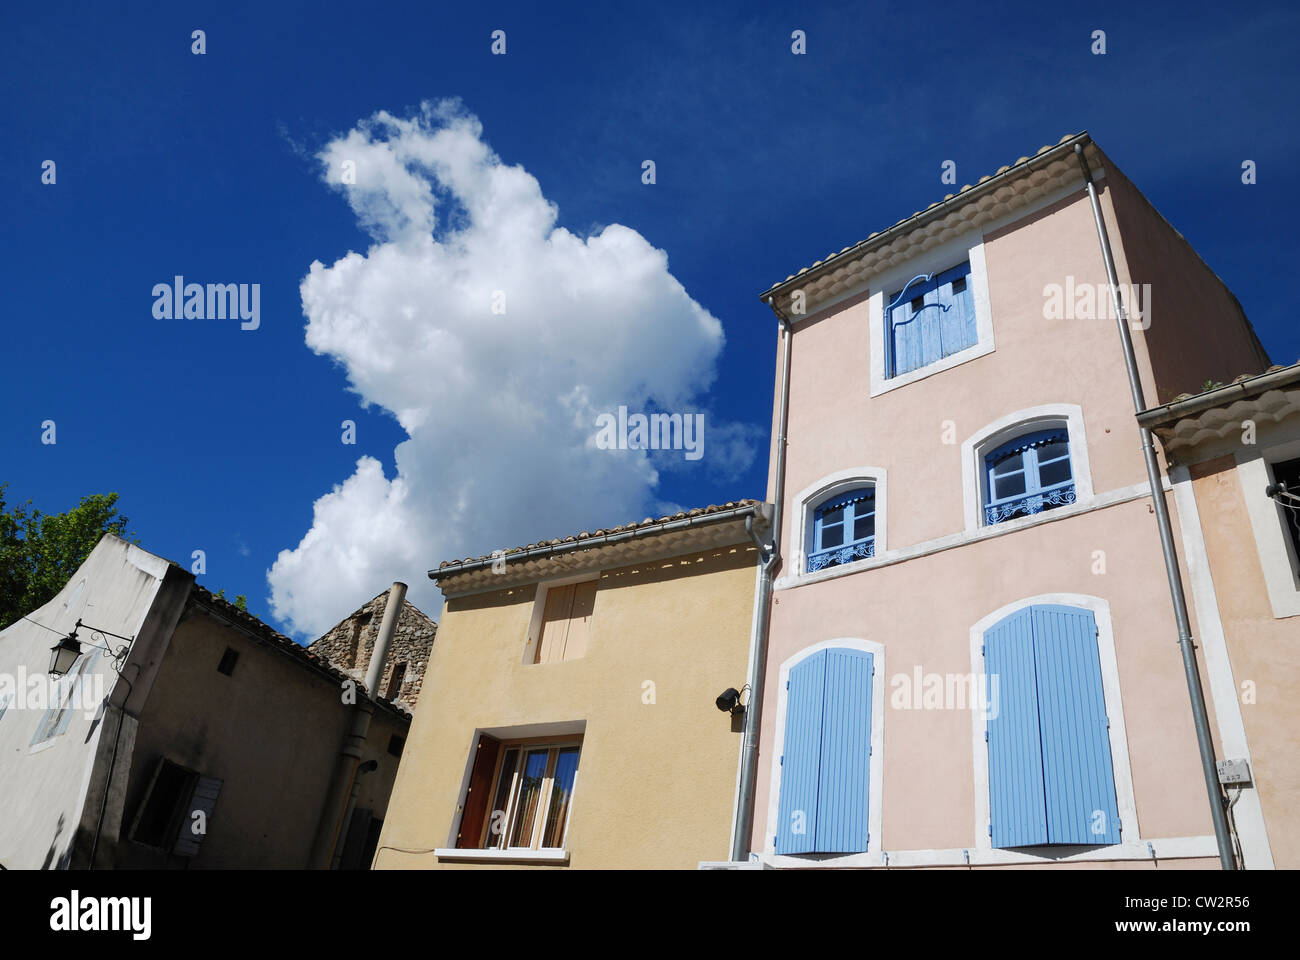 Blue finestre con persiane a Sainte Cécile Les Vignes, Vaucluse Provence, Francia. Foto Stock